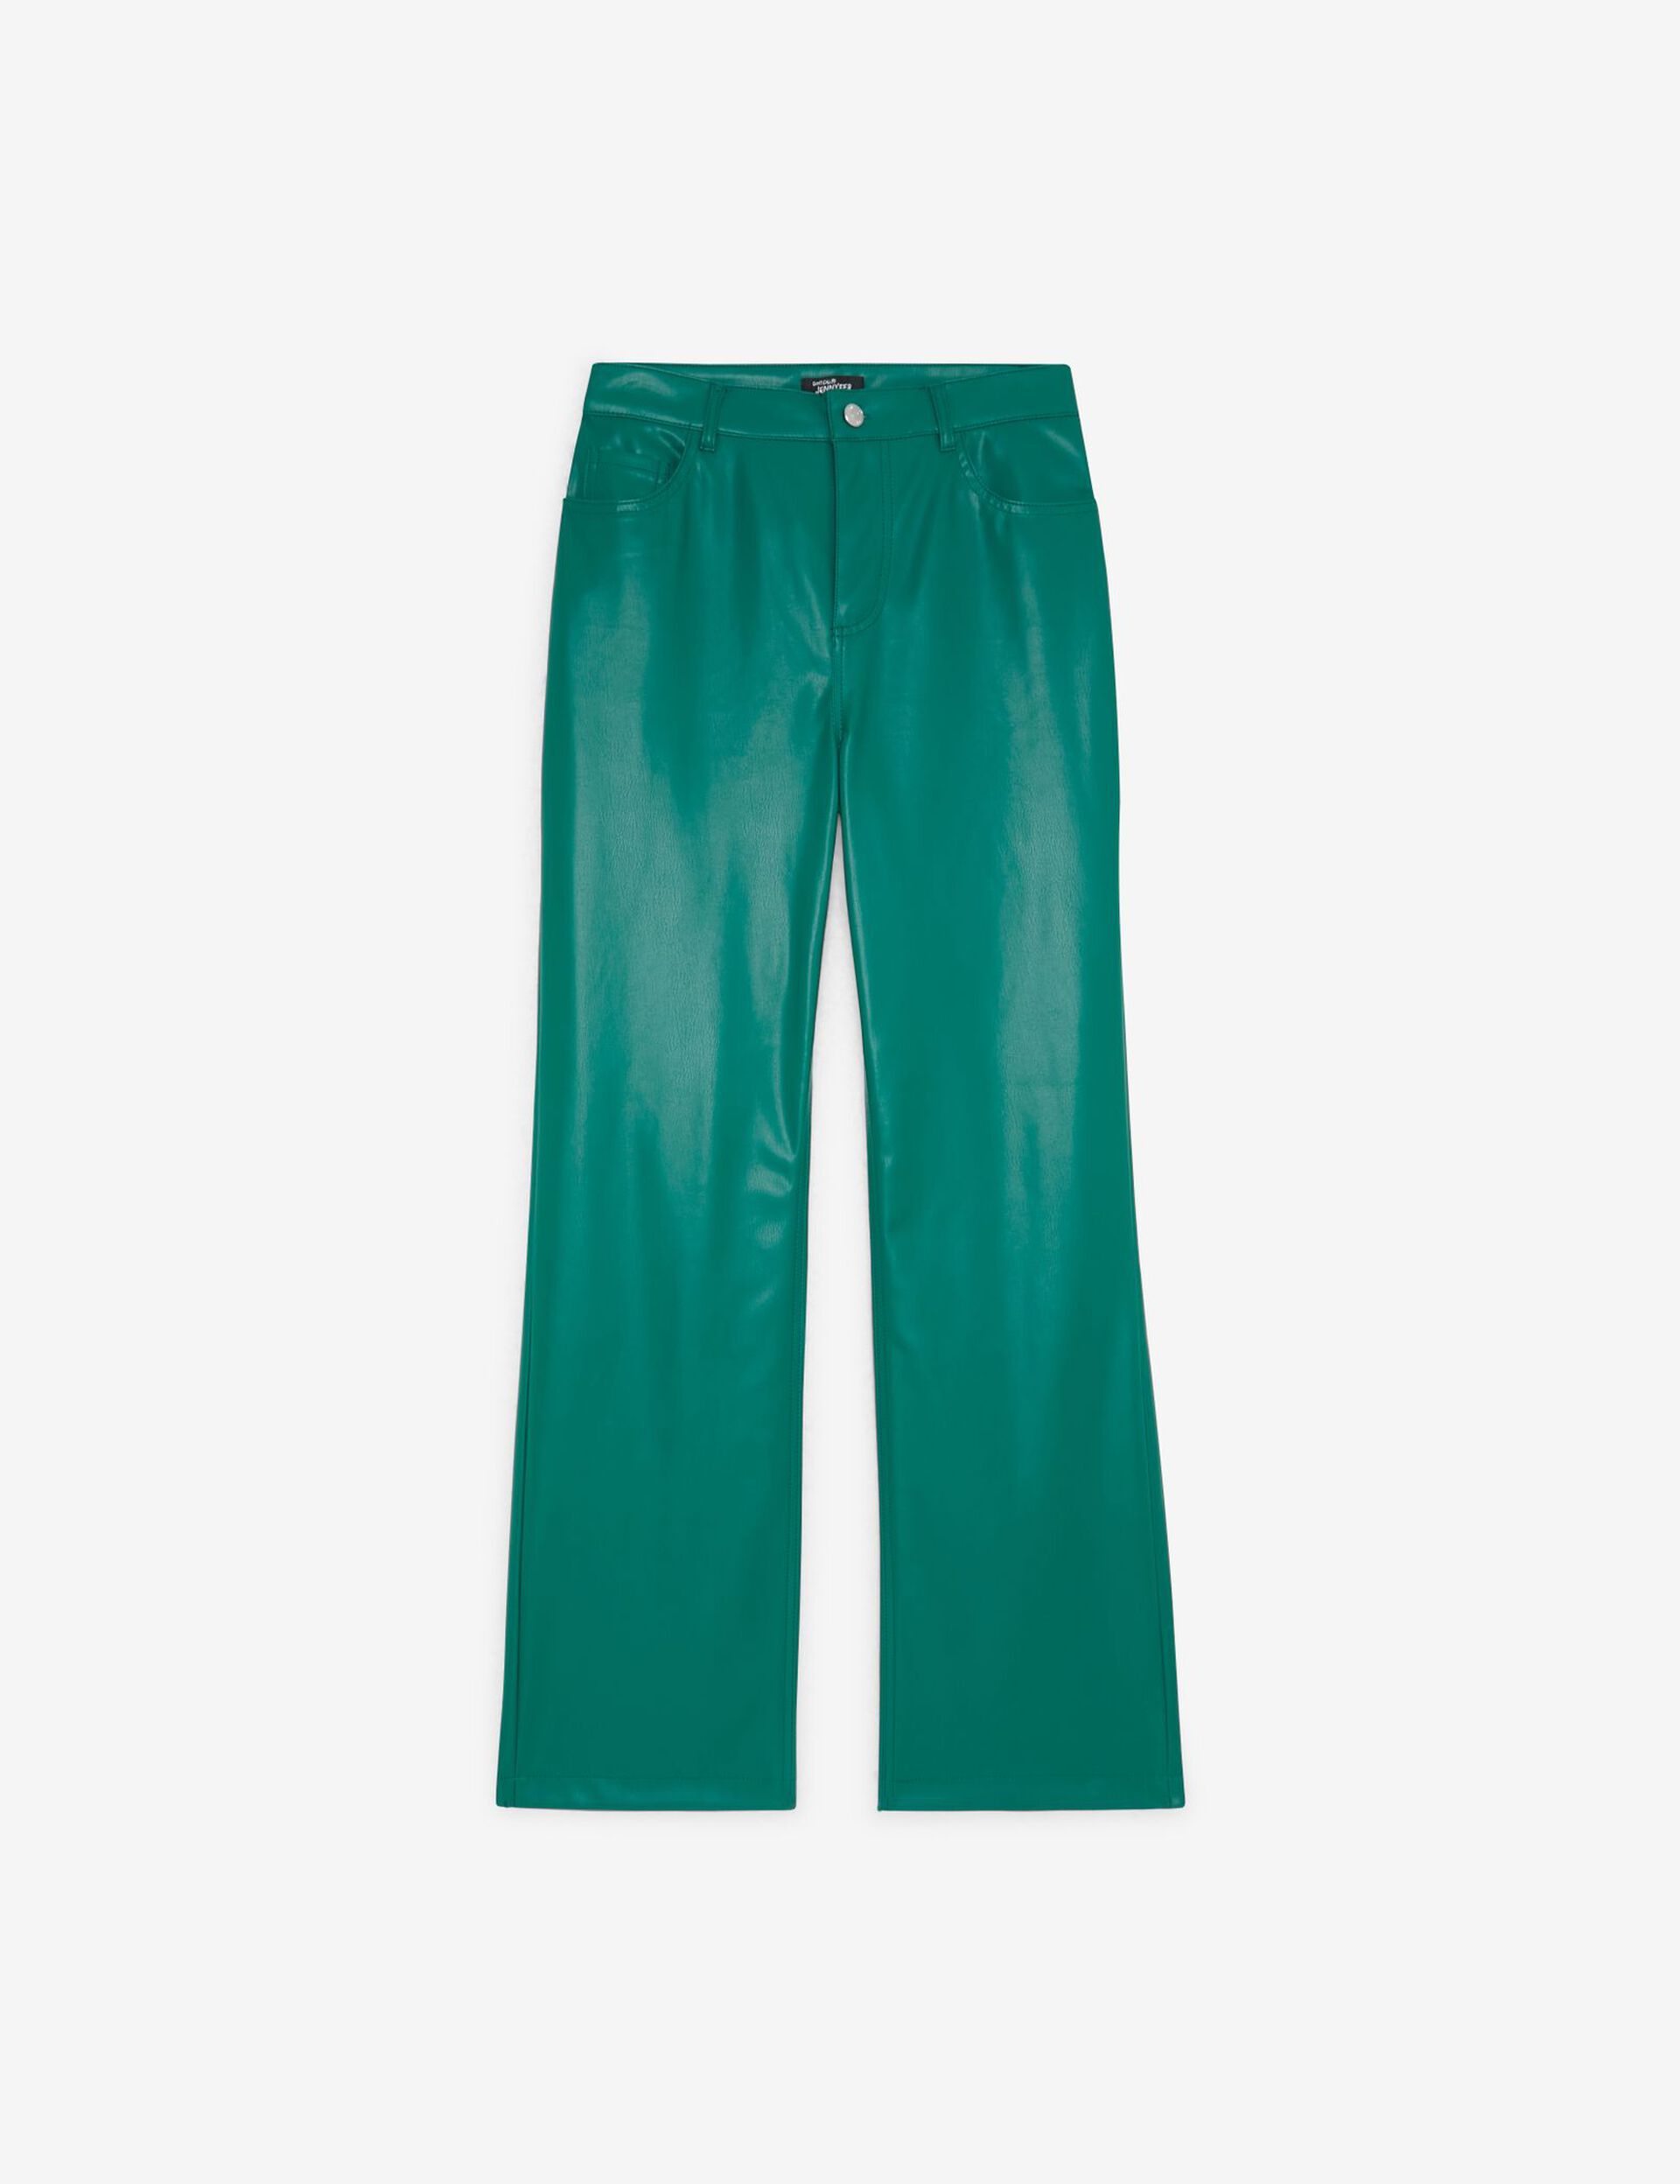 Pantalon enduit coupe droite vert